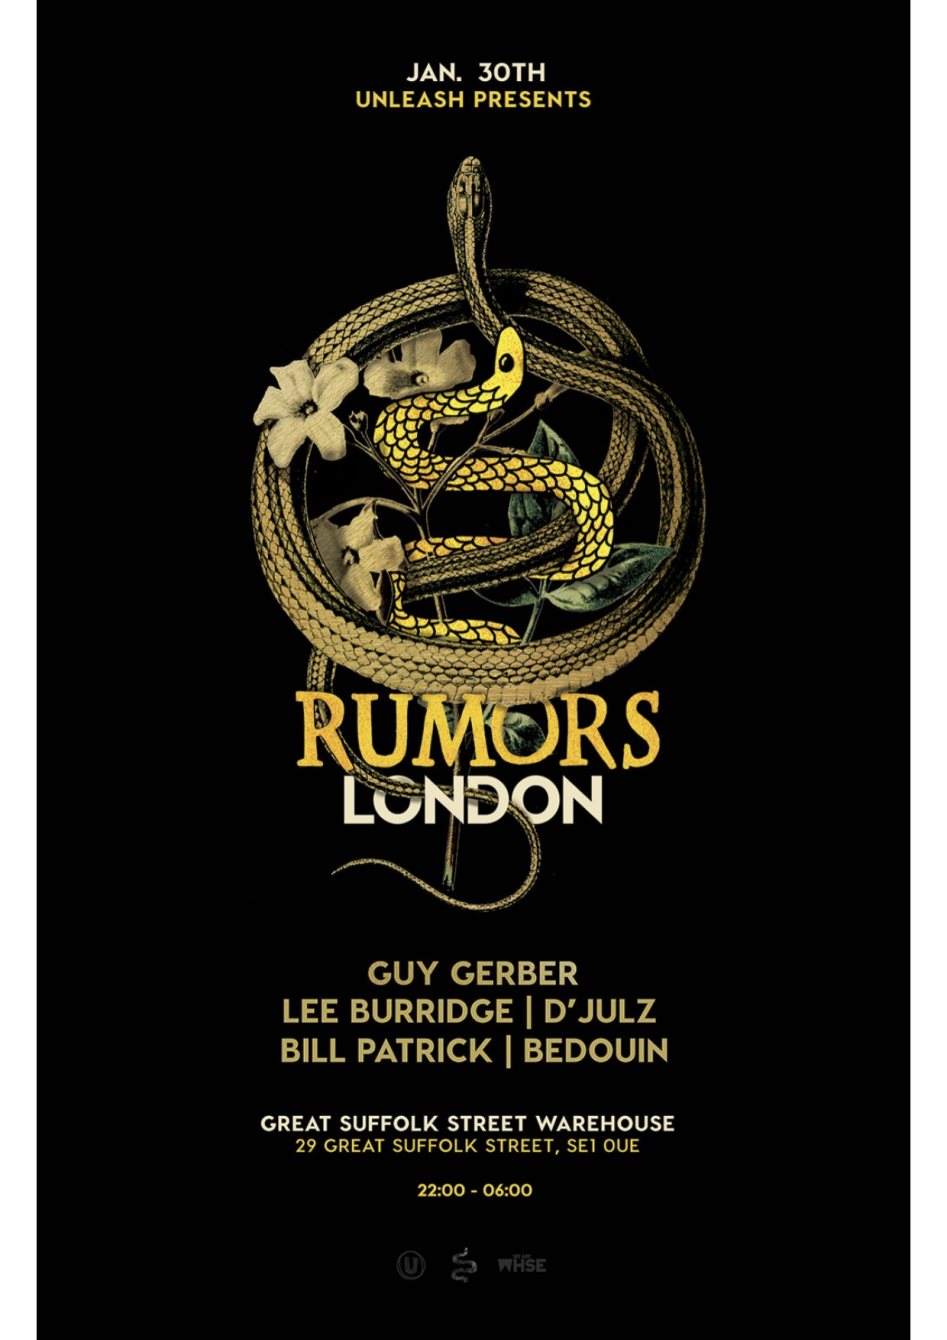 Guy Gerber + Unleash present Rumors London - Página frontal